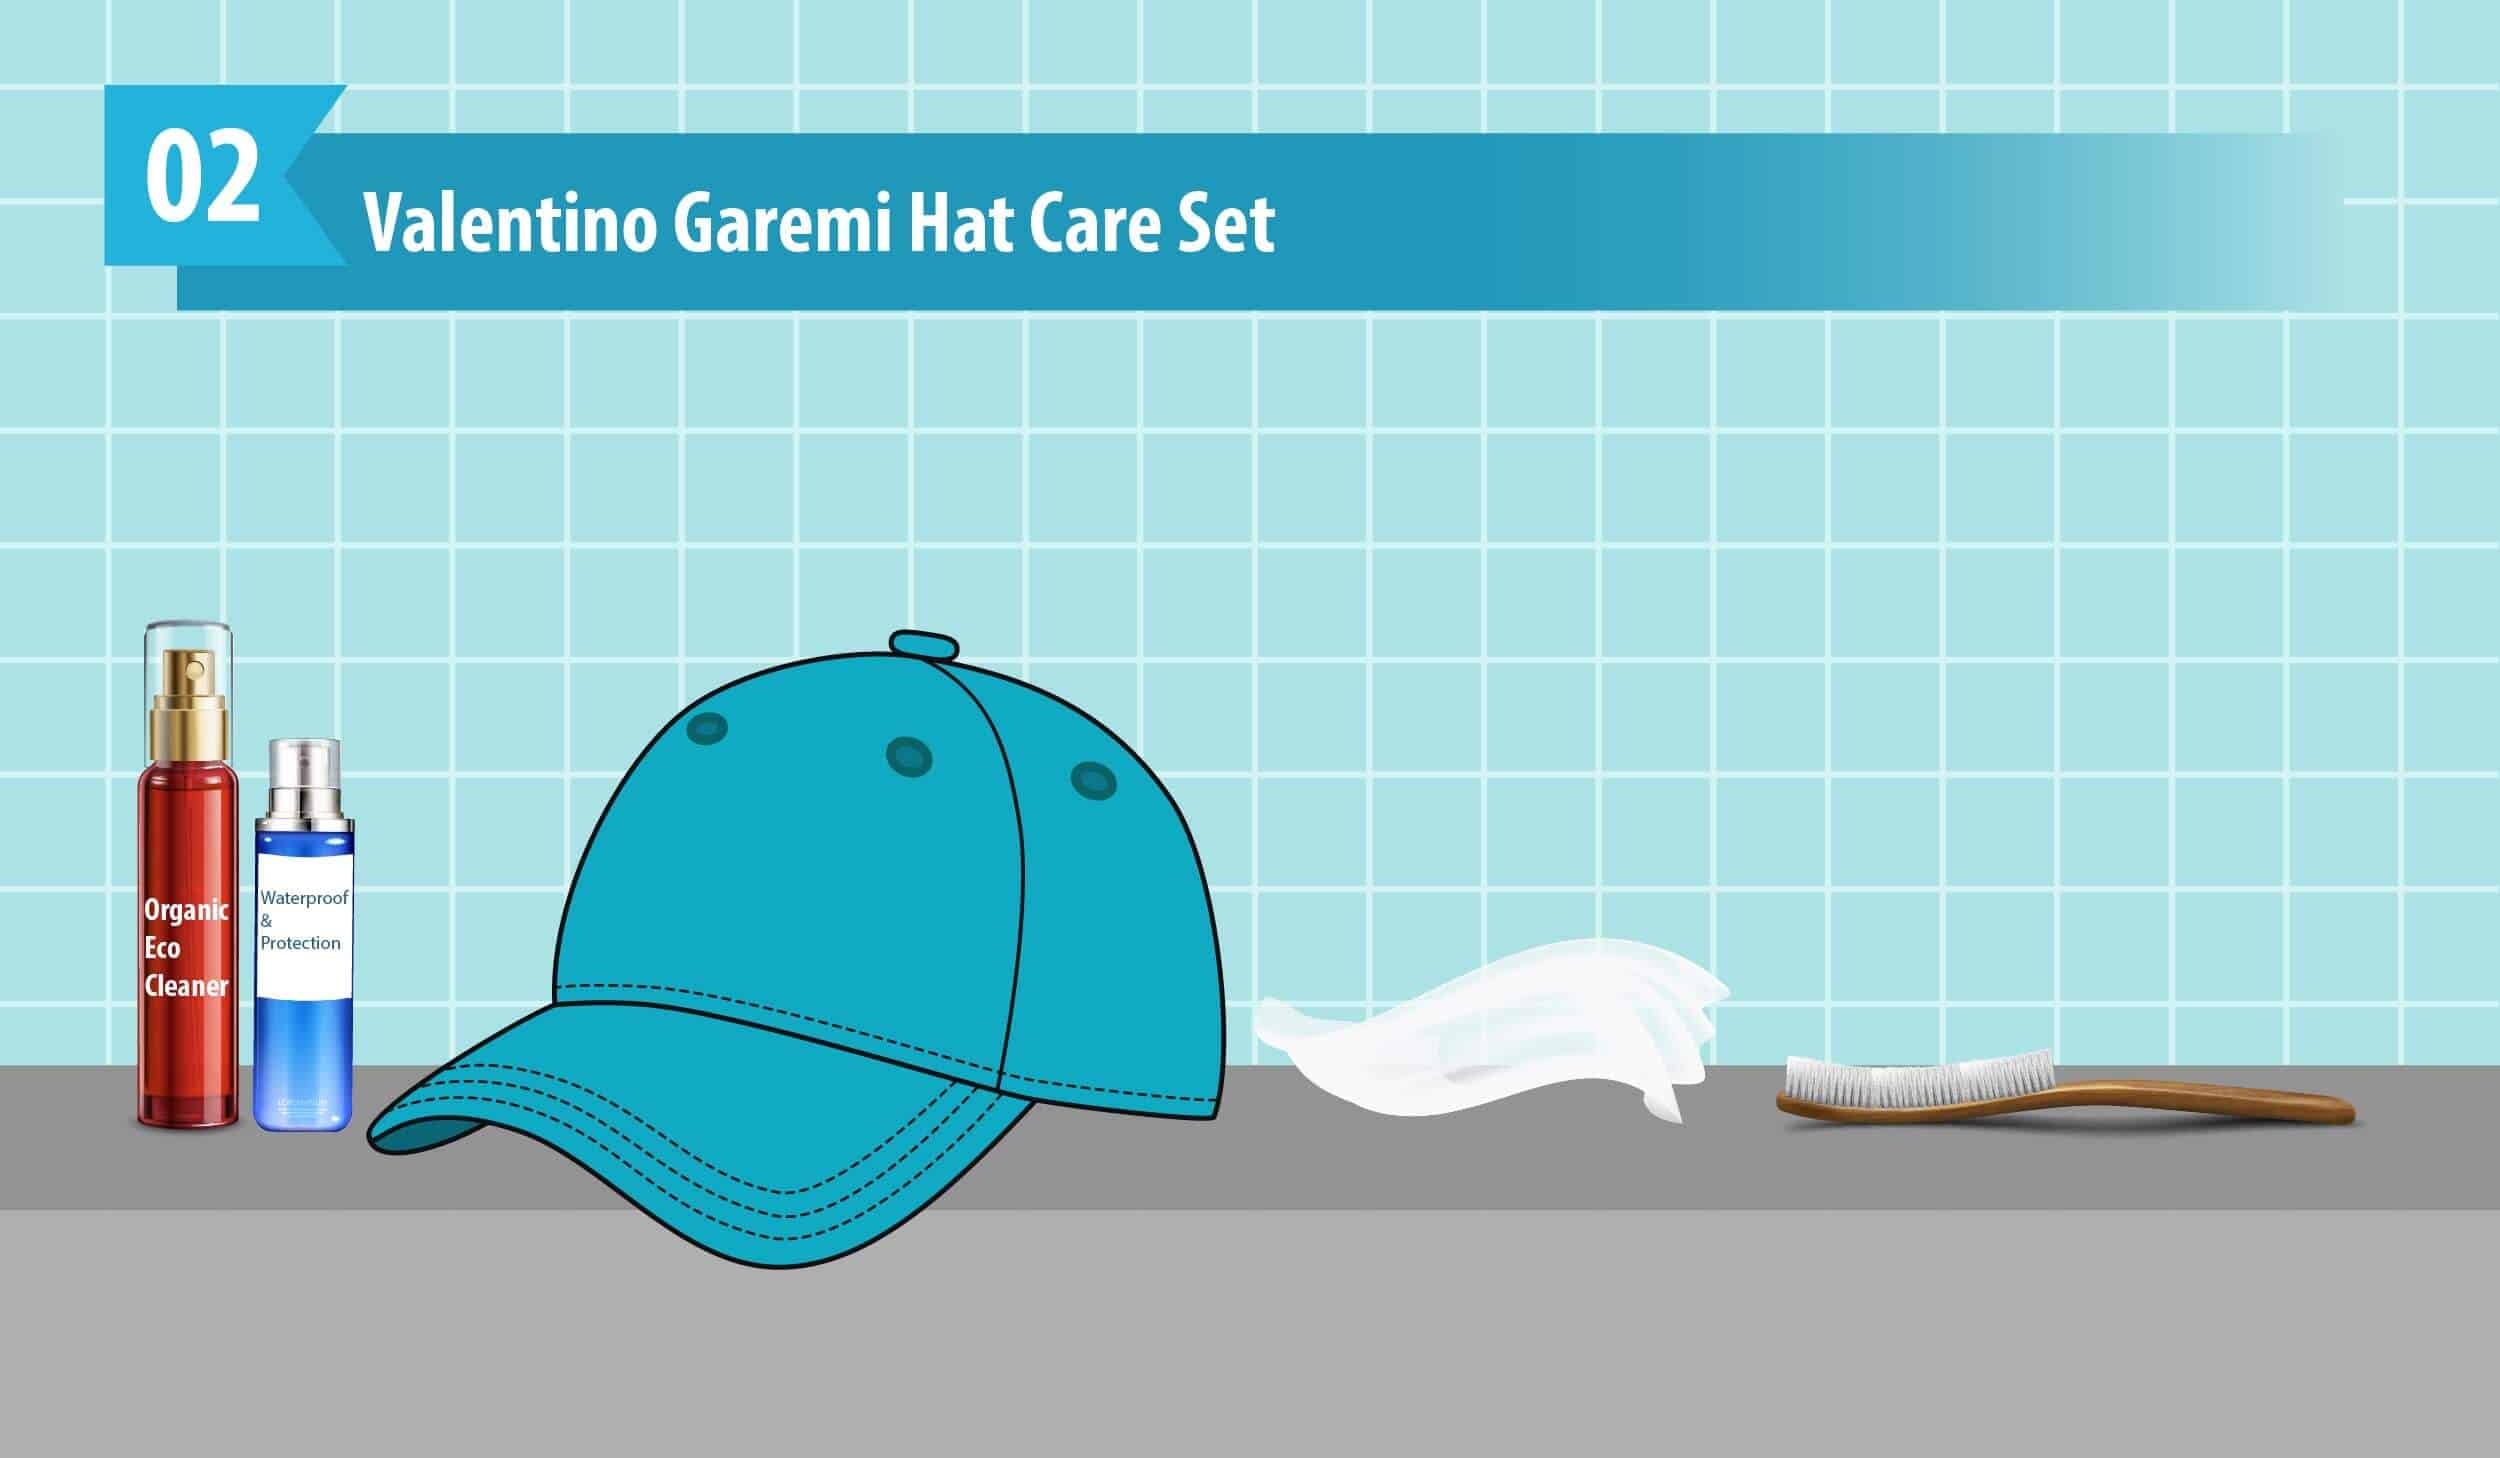 Valentino Garemi Hat Care Set